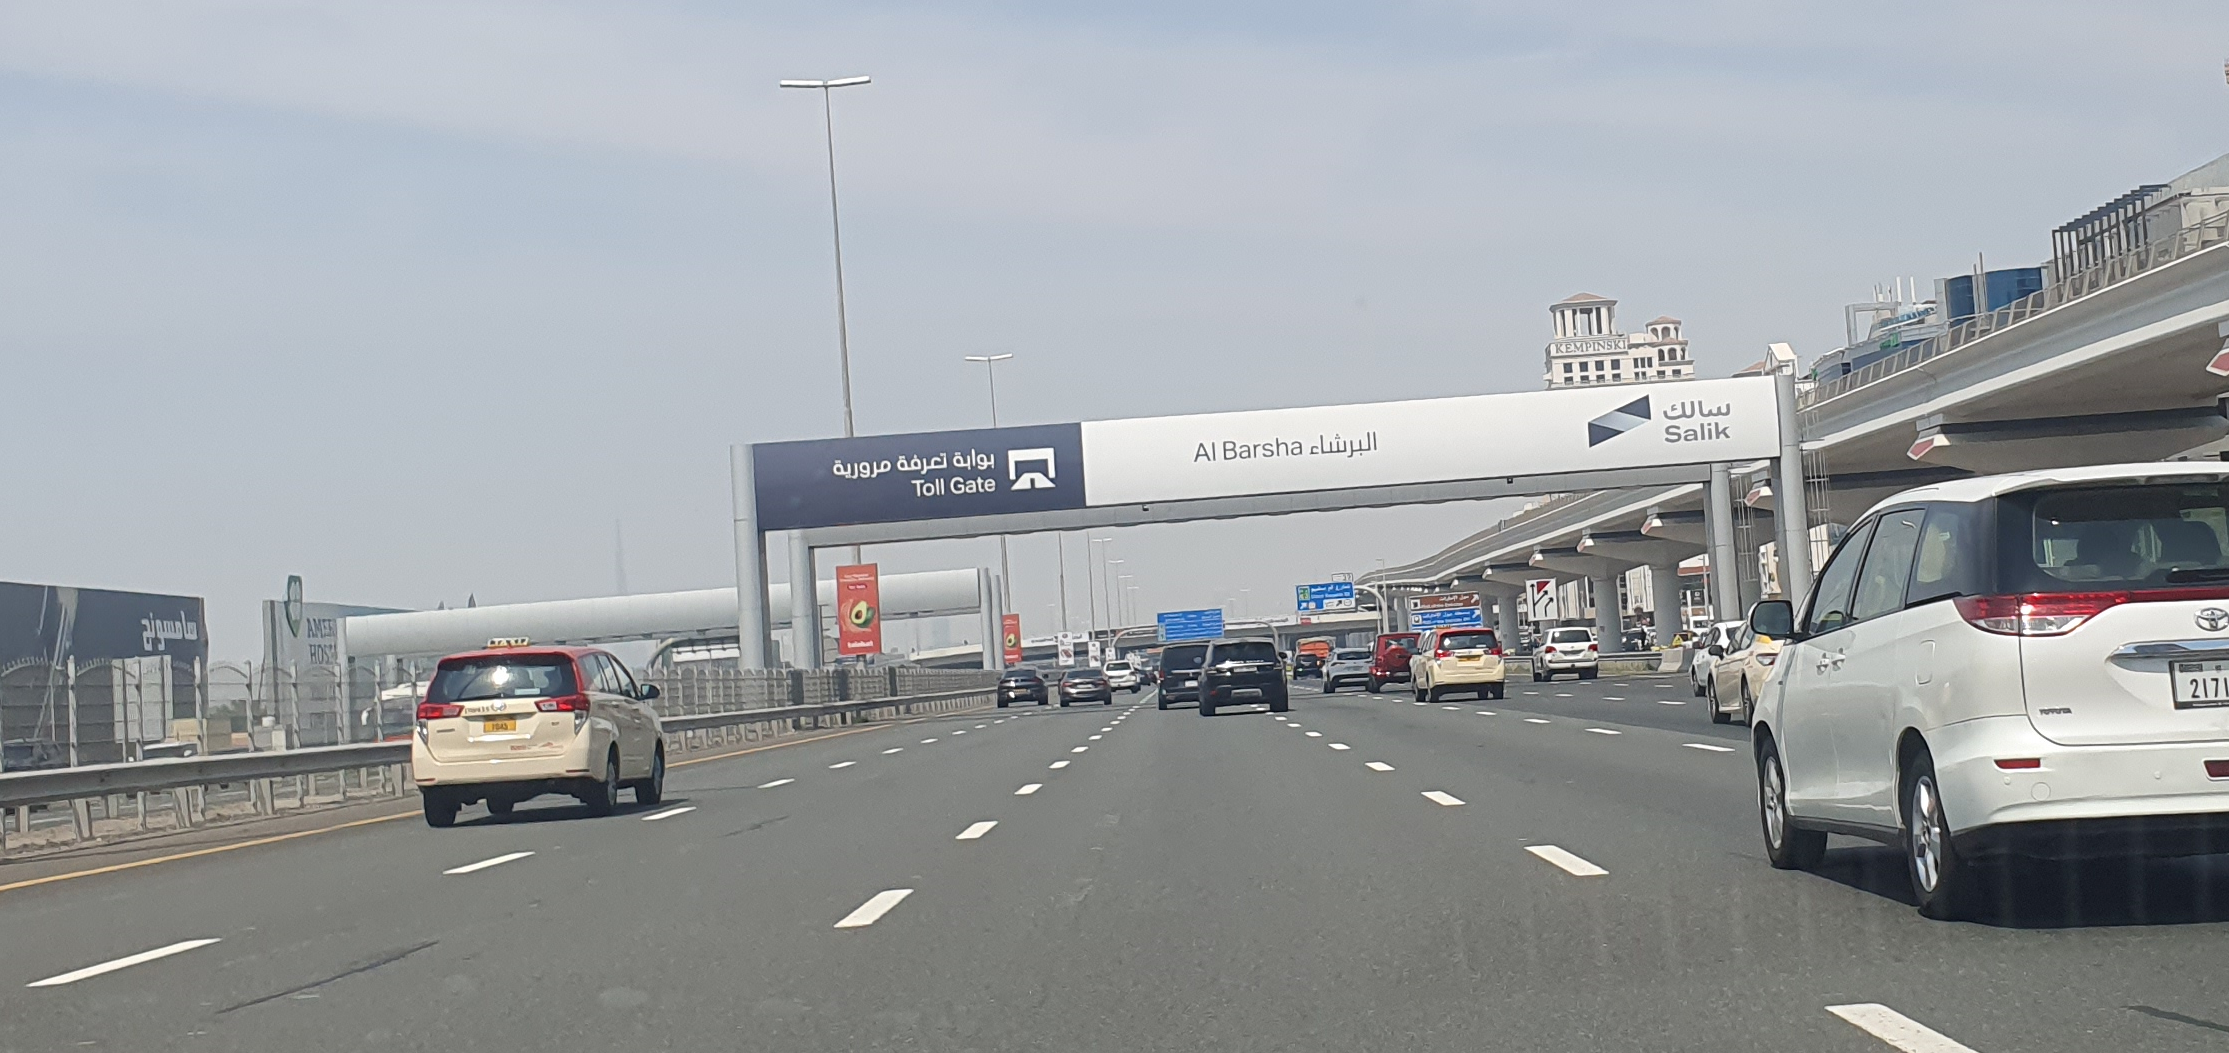 Al Barsha salik Toll gate Dubai